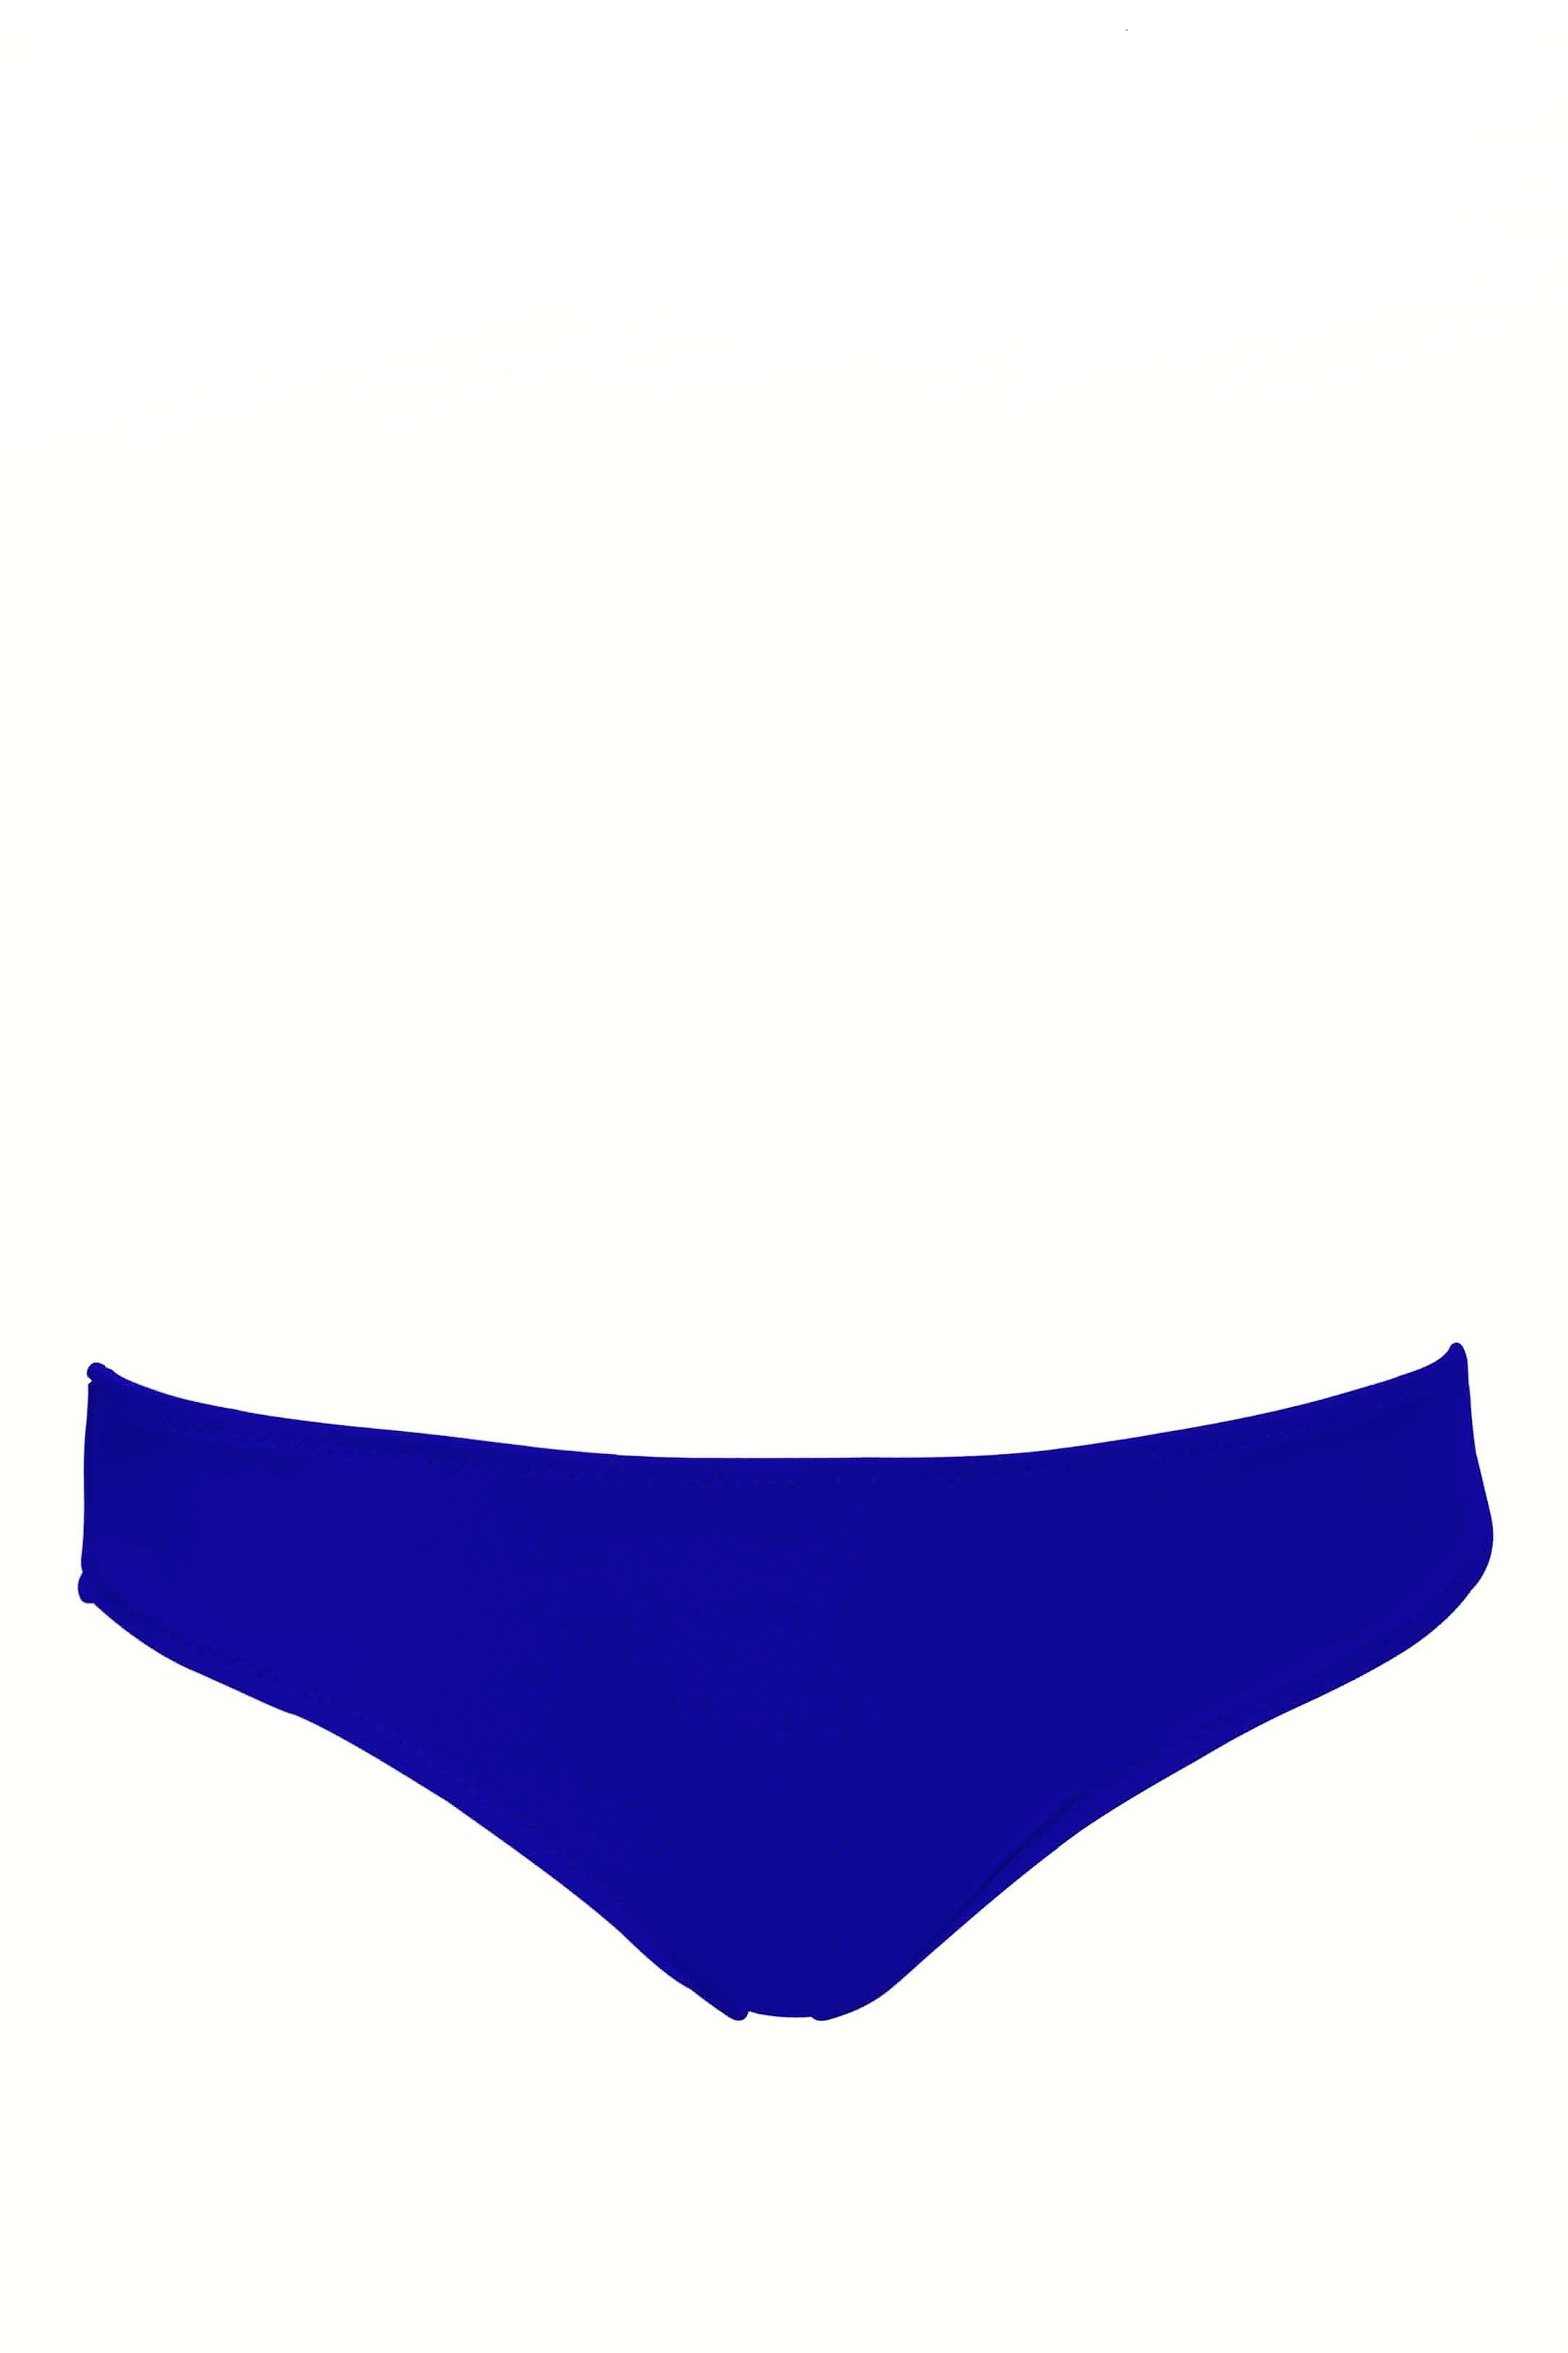 Phax Kobalt Blauw Klassiek Bikini Broekje